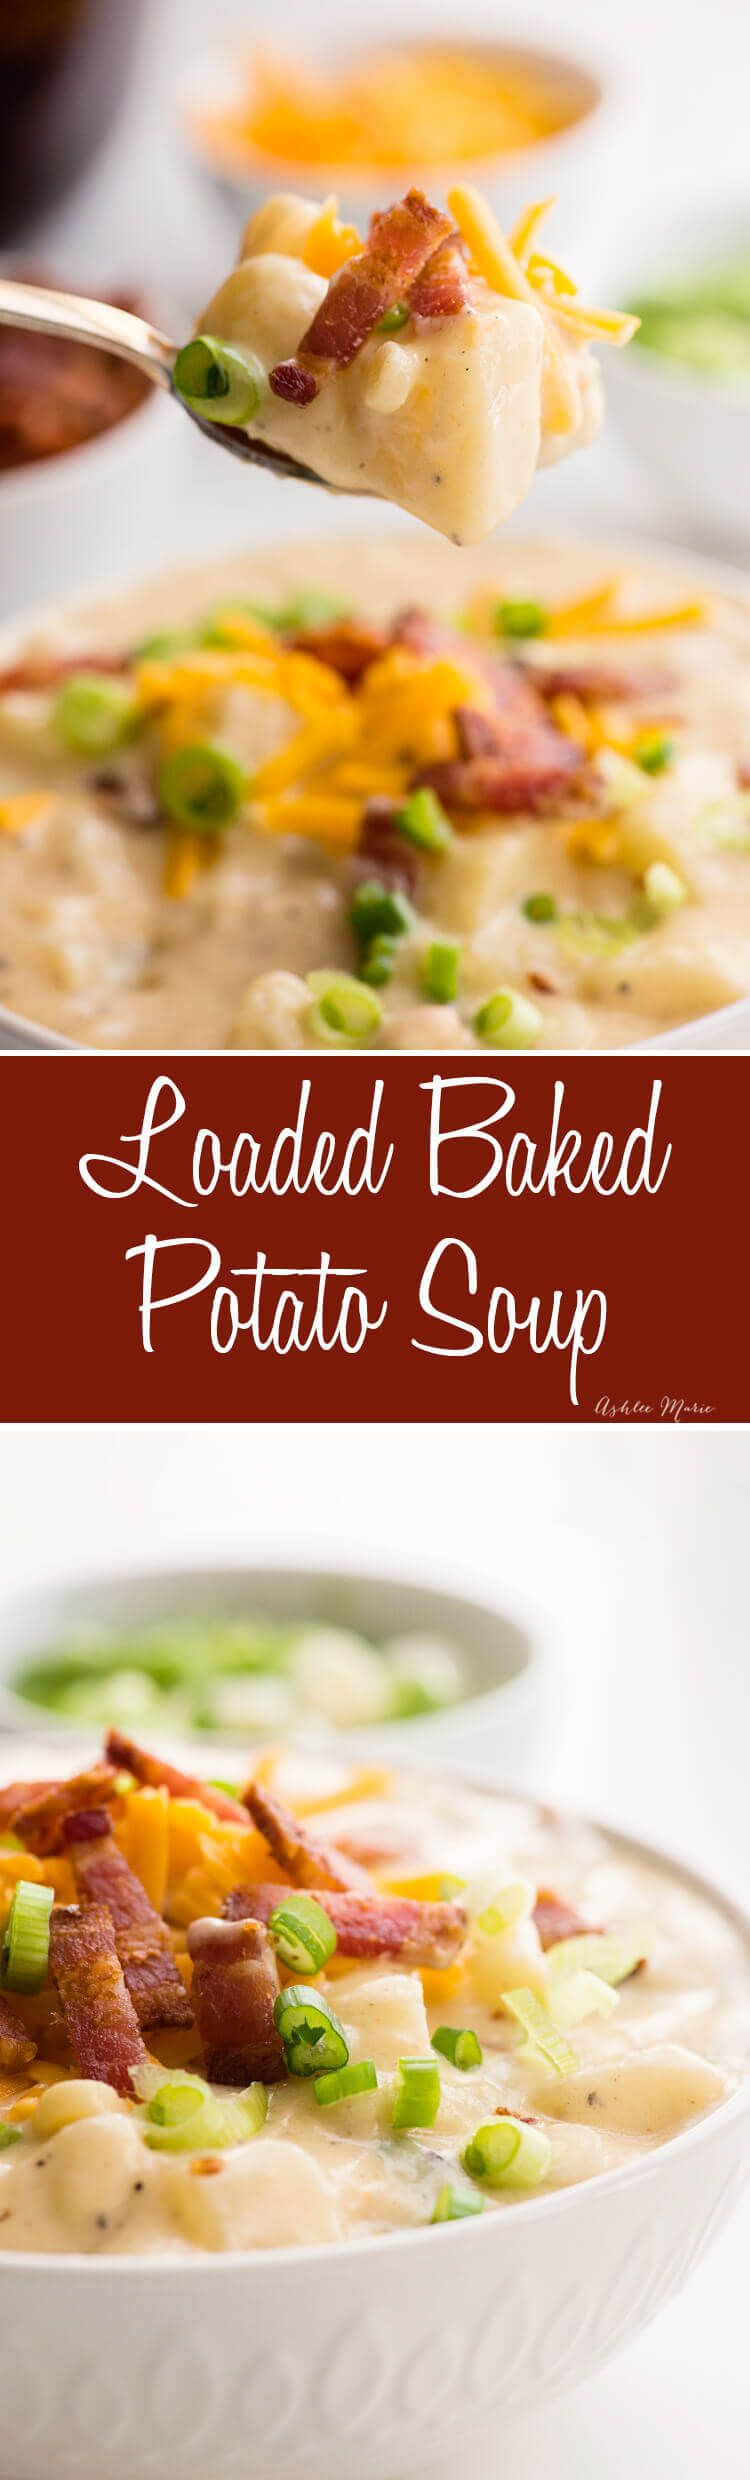 Chilis Loaded Baked Potato Soup Recipe
 one pot loaded baked potato soup creamy rich and